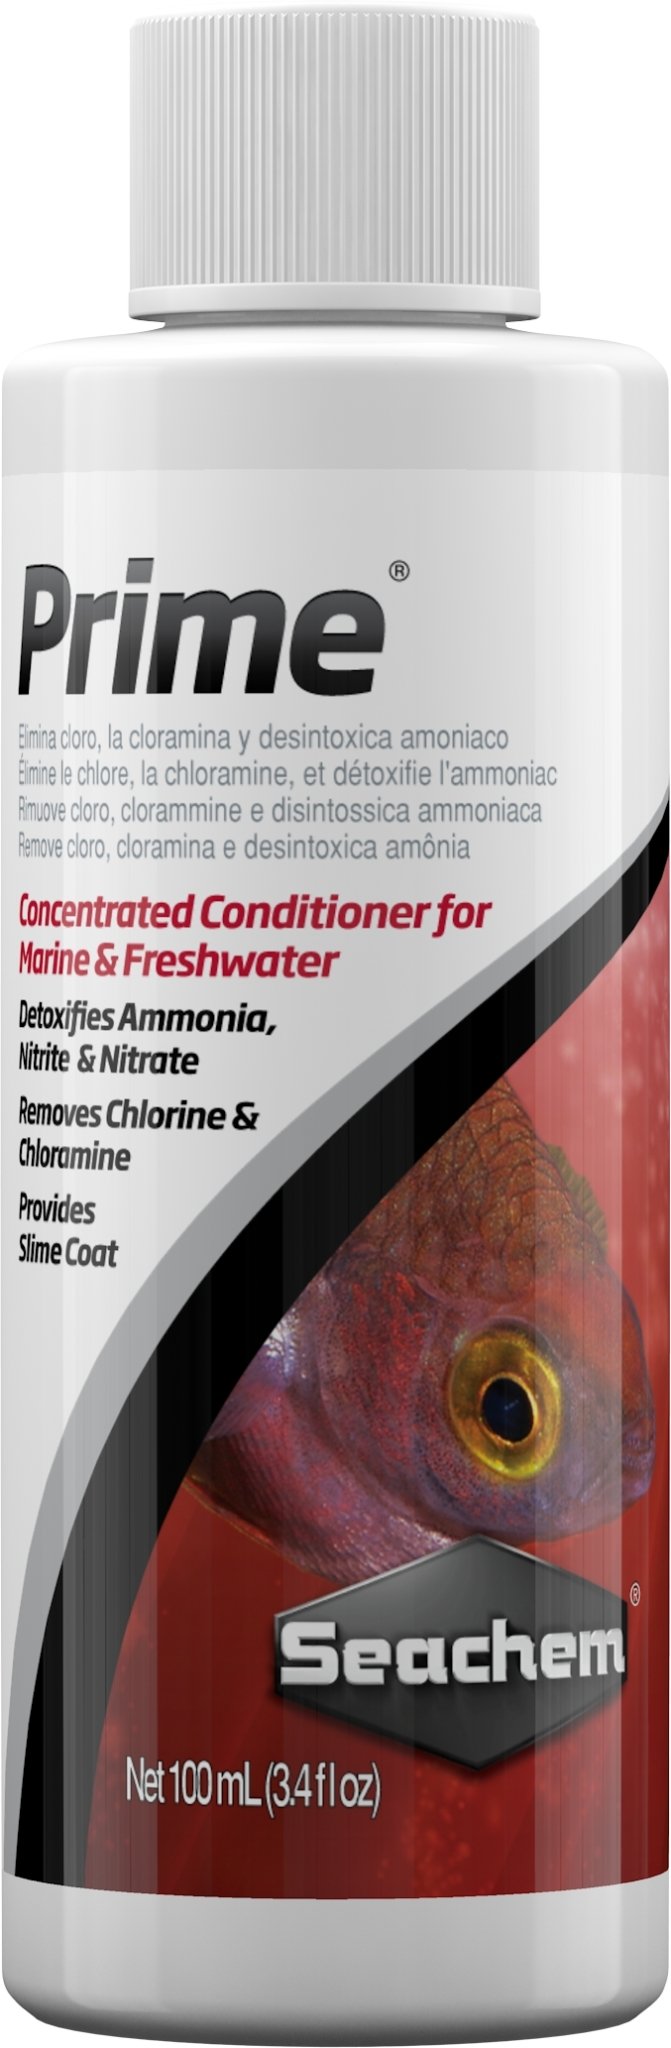 Seachem Prime Water Conditioner - Woonona Petfood & Produce